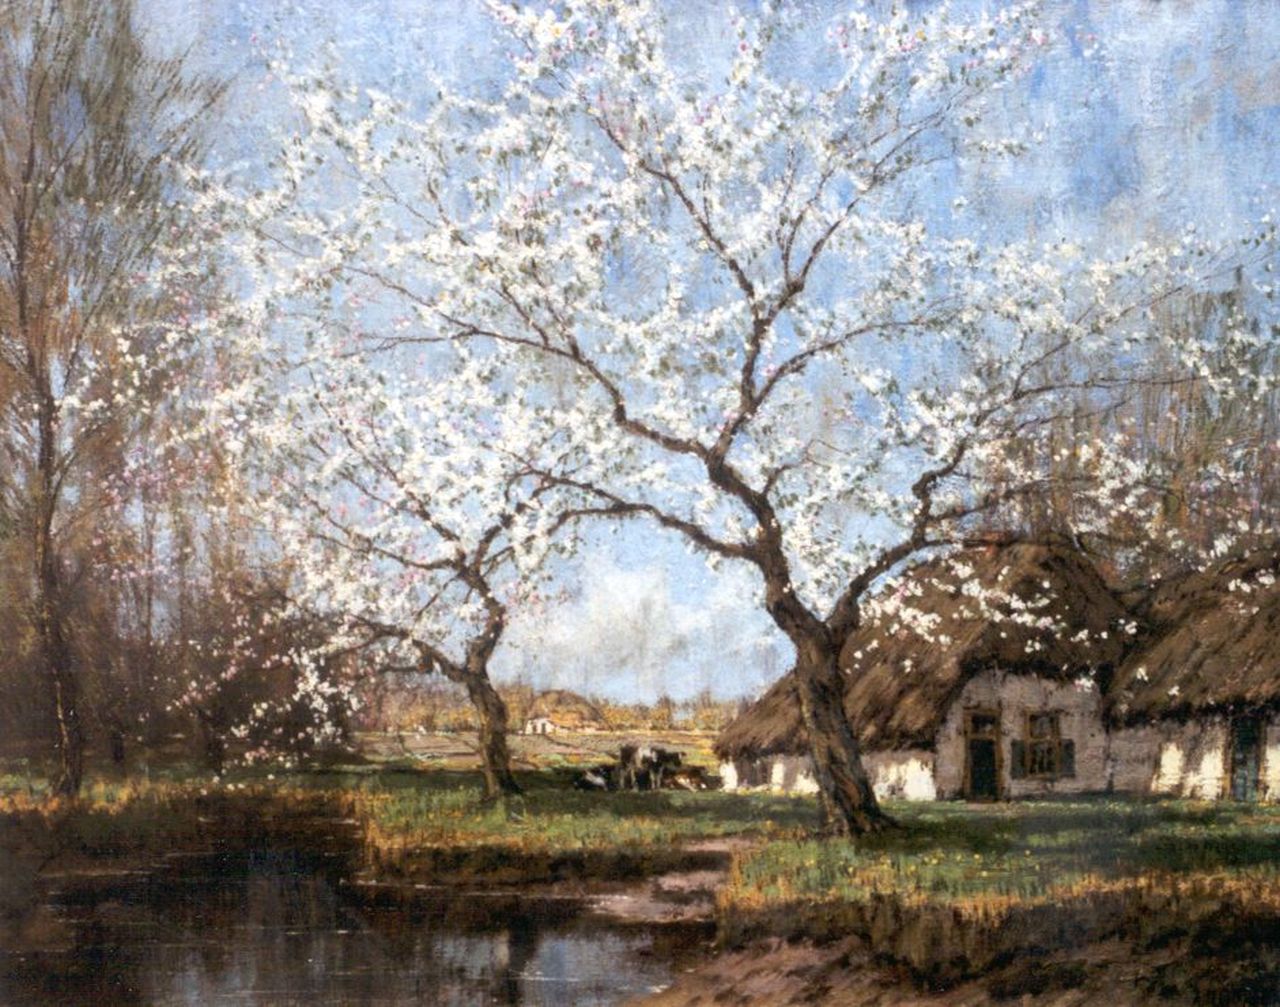 Gorter A.M.  | 'Arnold' Marc Gorter, Blossoming trees, Öl auf Leinwand 62,2 x 79,3 cm, signed l.r.